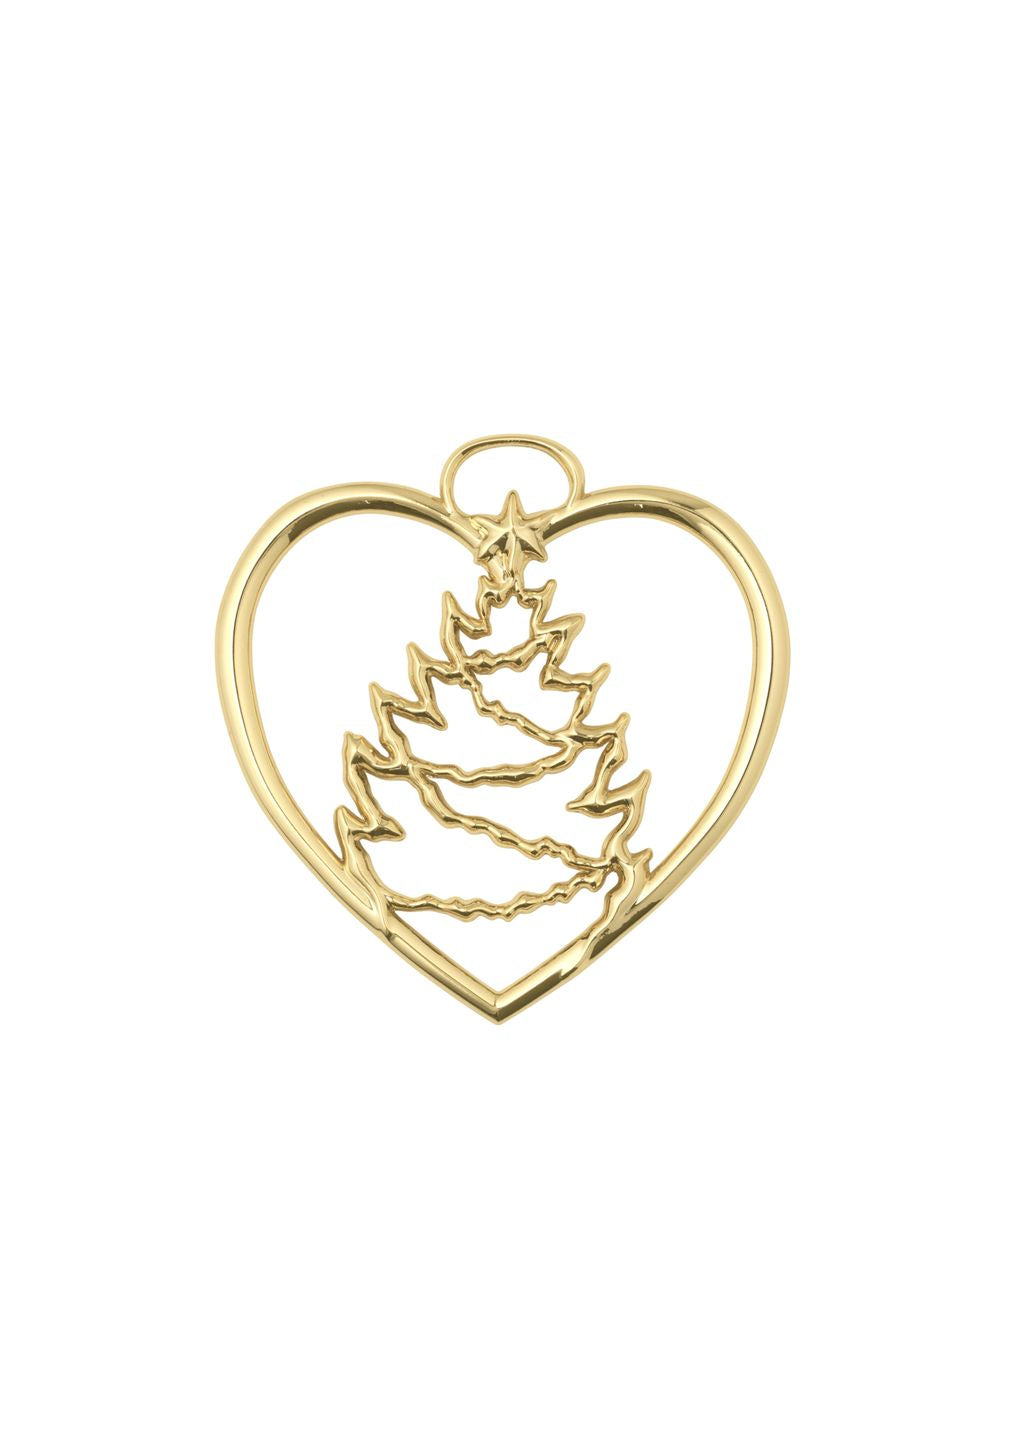 Rosendahl Karen Blixen Heart Christmas Tree H7.5 Cm, Gold Plated